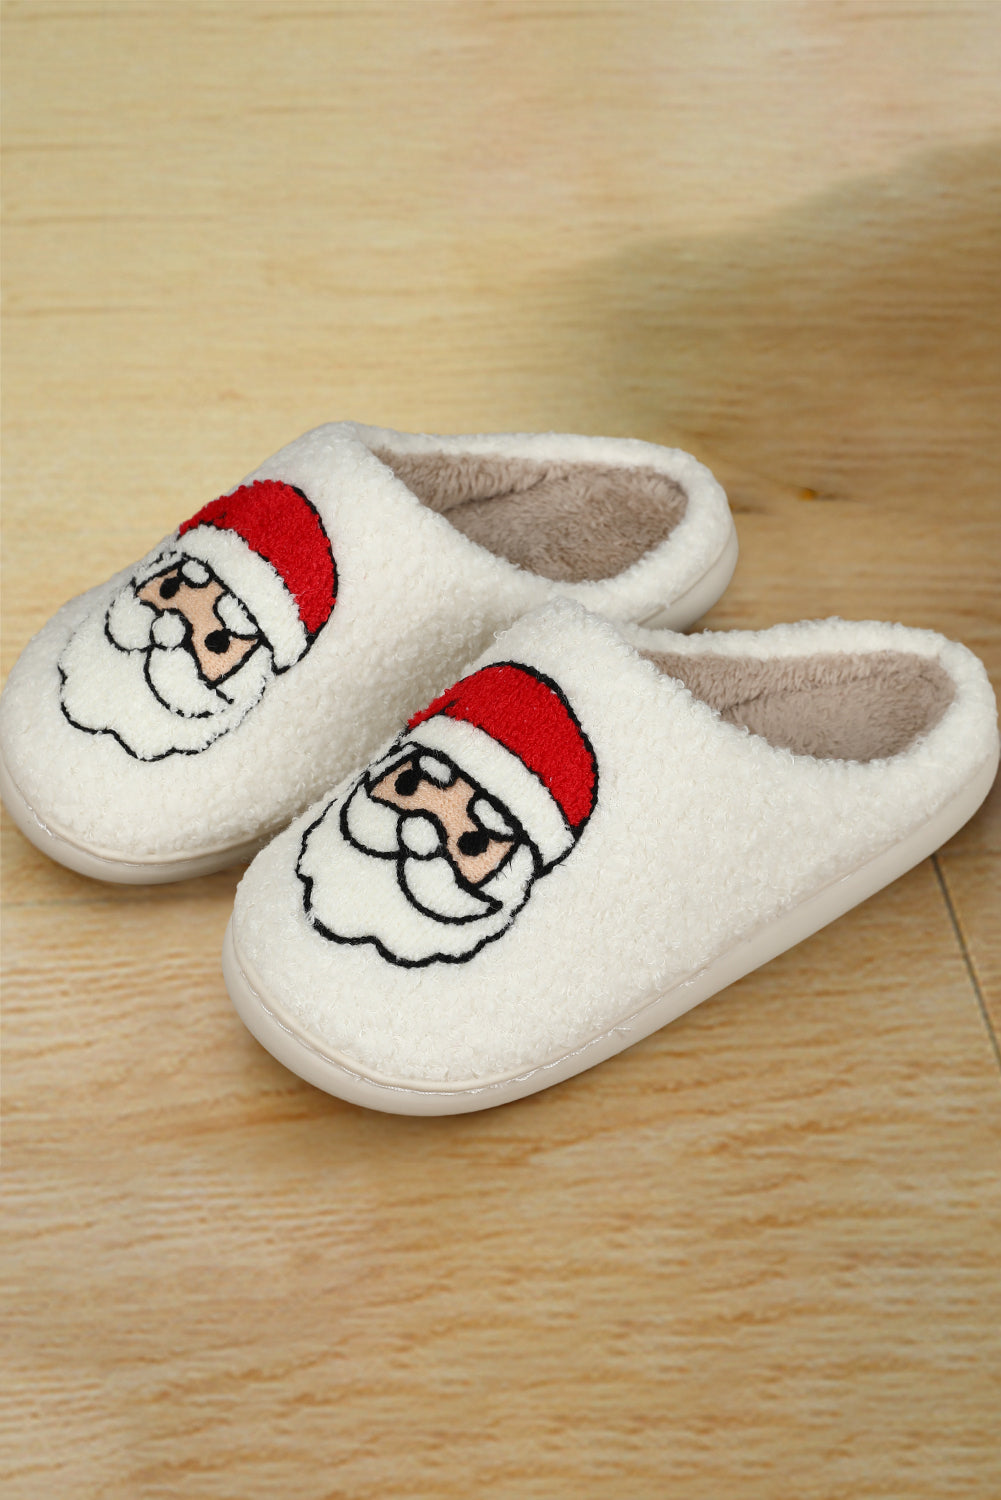 BH023138-P101-37, BH023138-P101-39, BH023138-P101-41, BH023138-P101-43, BH023138-P101-38, BH023138-P101-40, BH023138-P101-42, White Fluffy Slippers For Women Christmas Santa Clause Graphic House Slip-on Plush Slippers